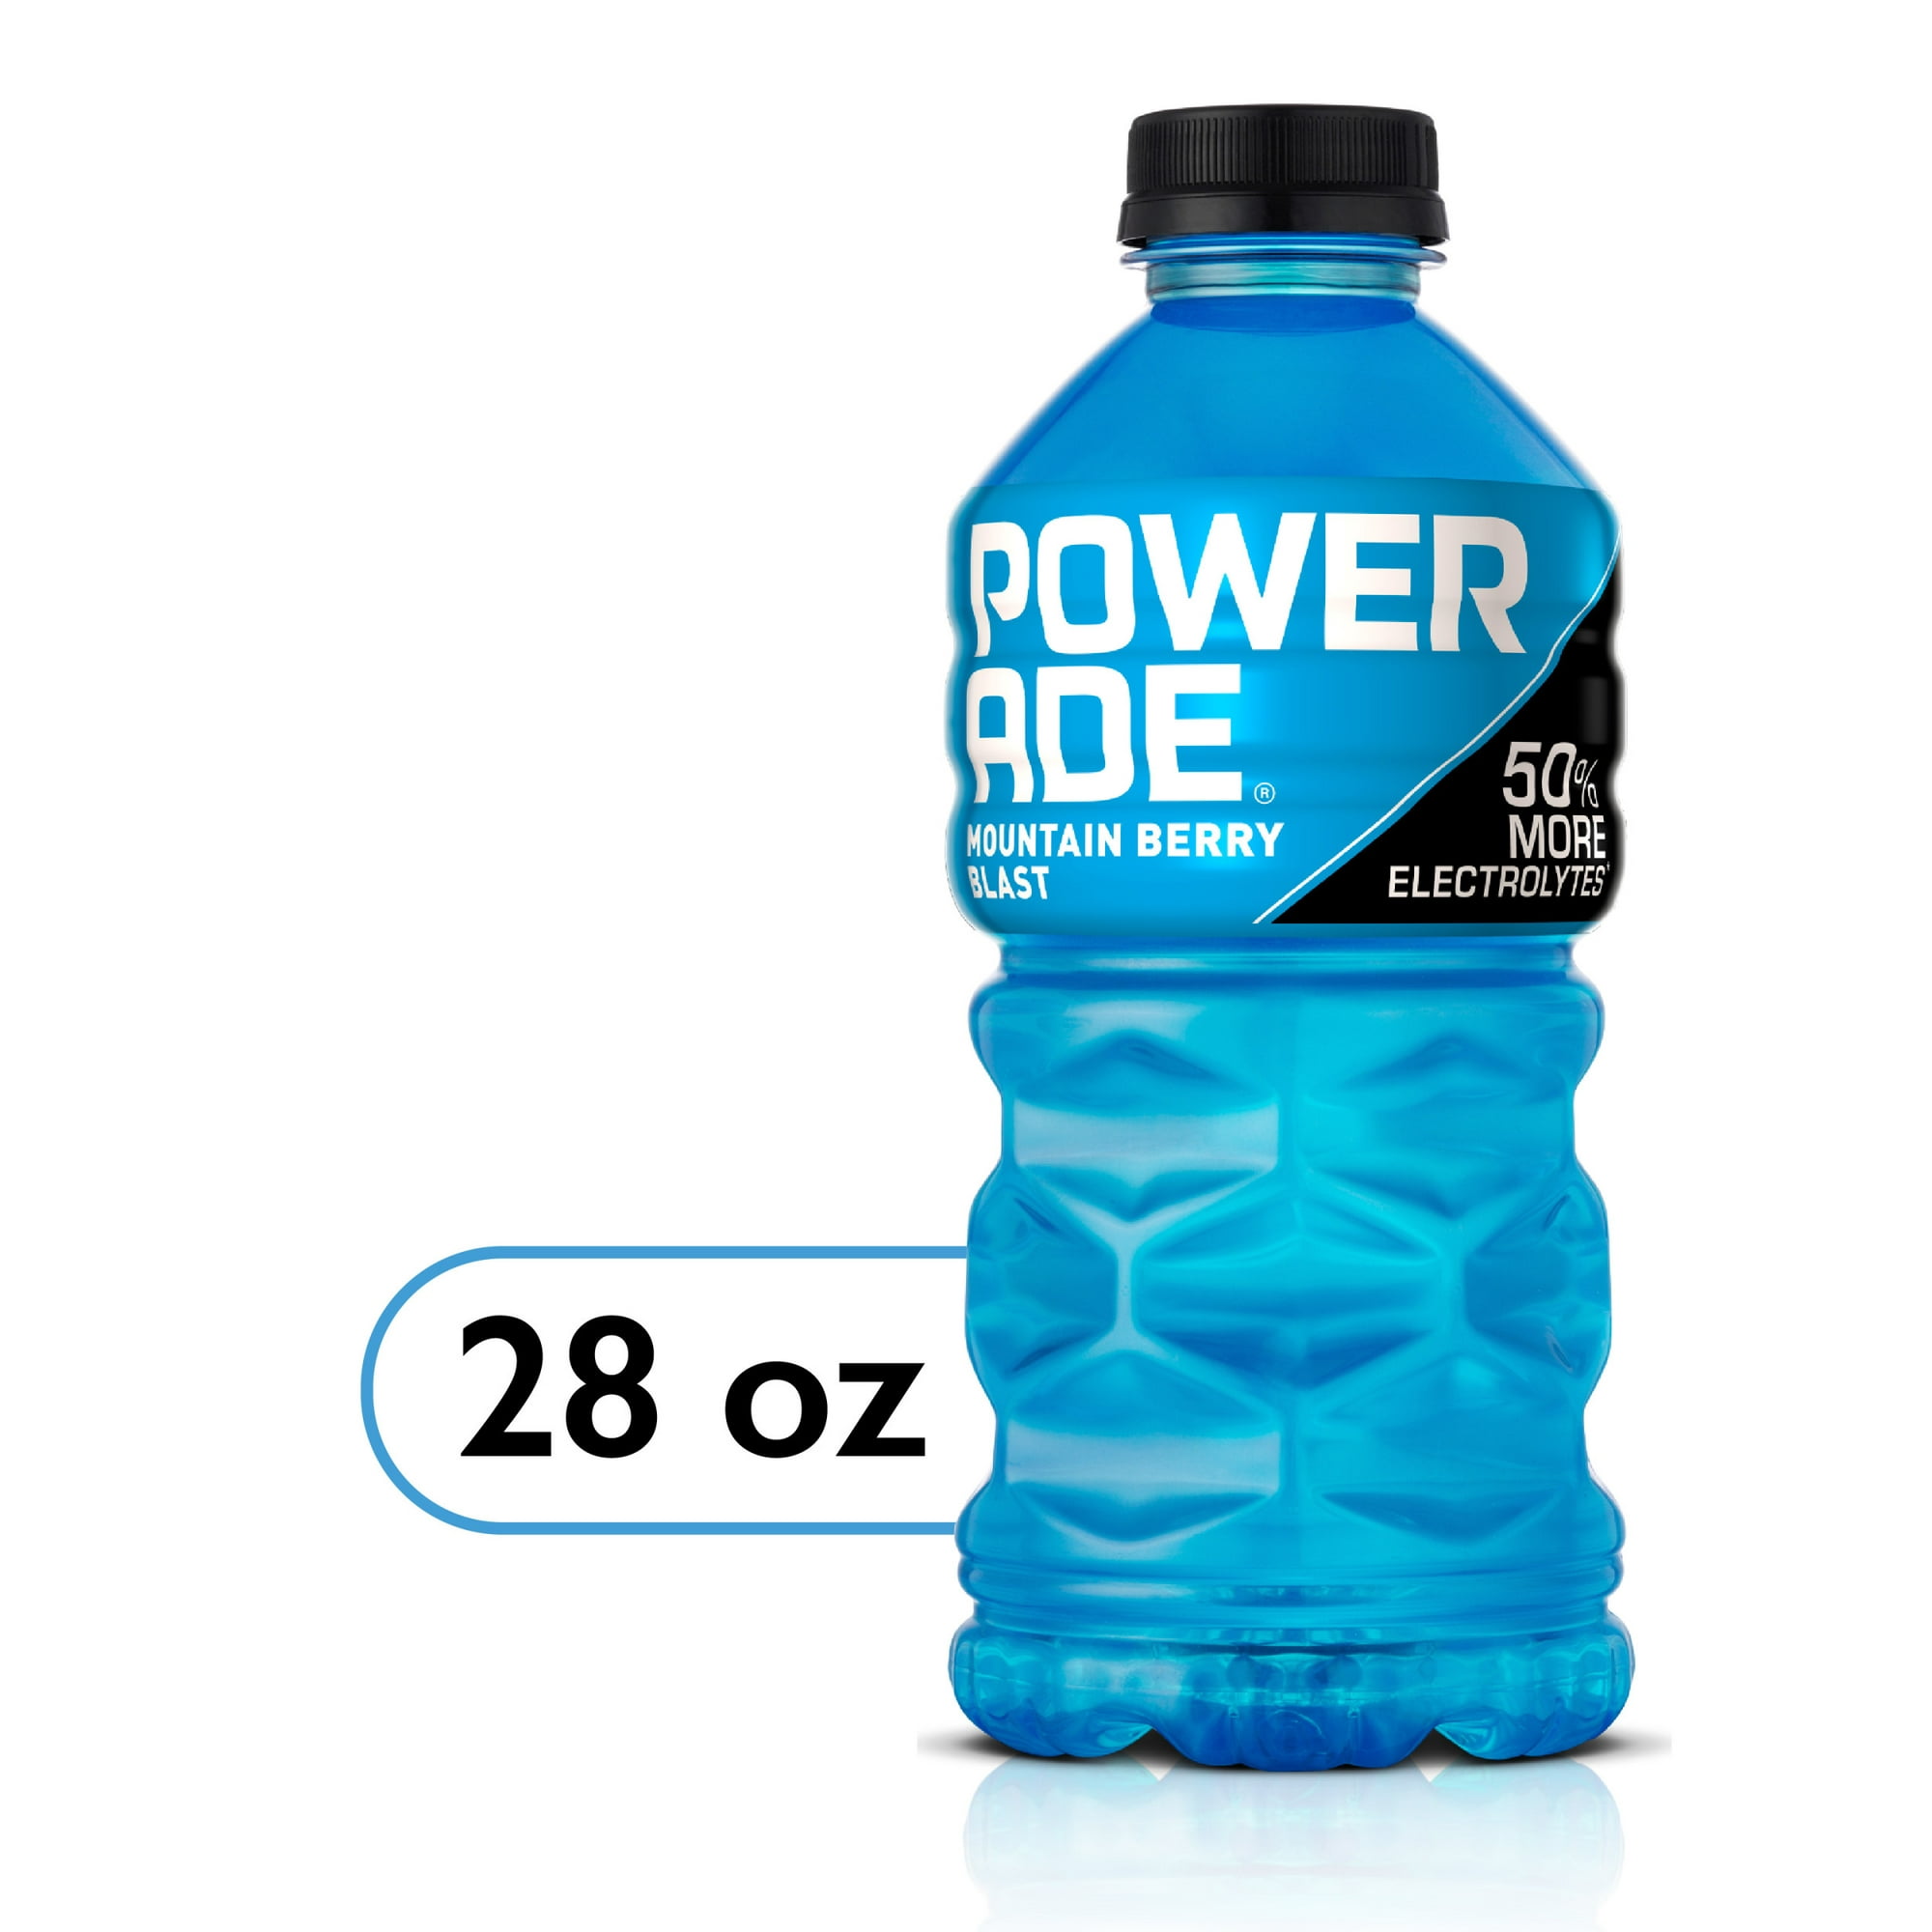 POWERADE Electrolyte Enhanced Mountain Berry Blast Sport Drink, 28 fl oz, Bottle